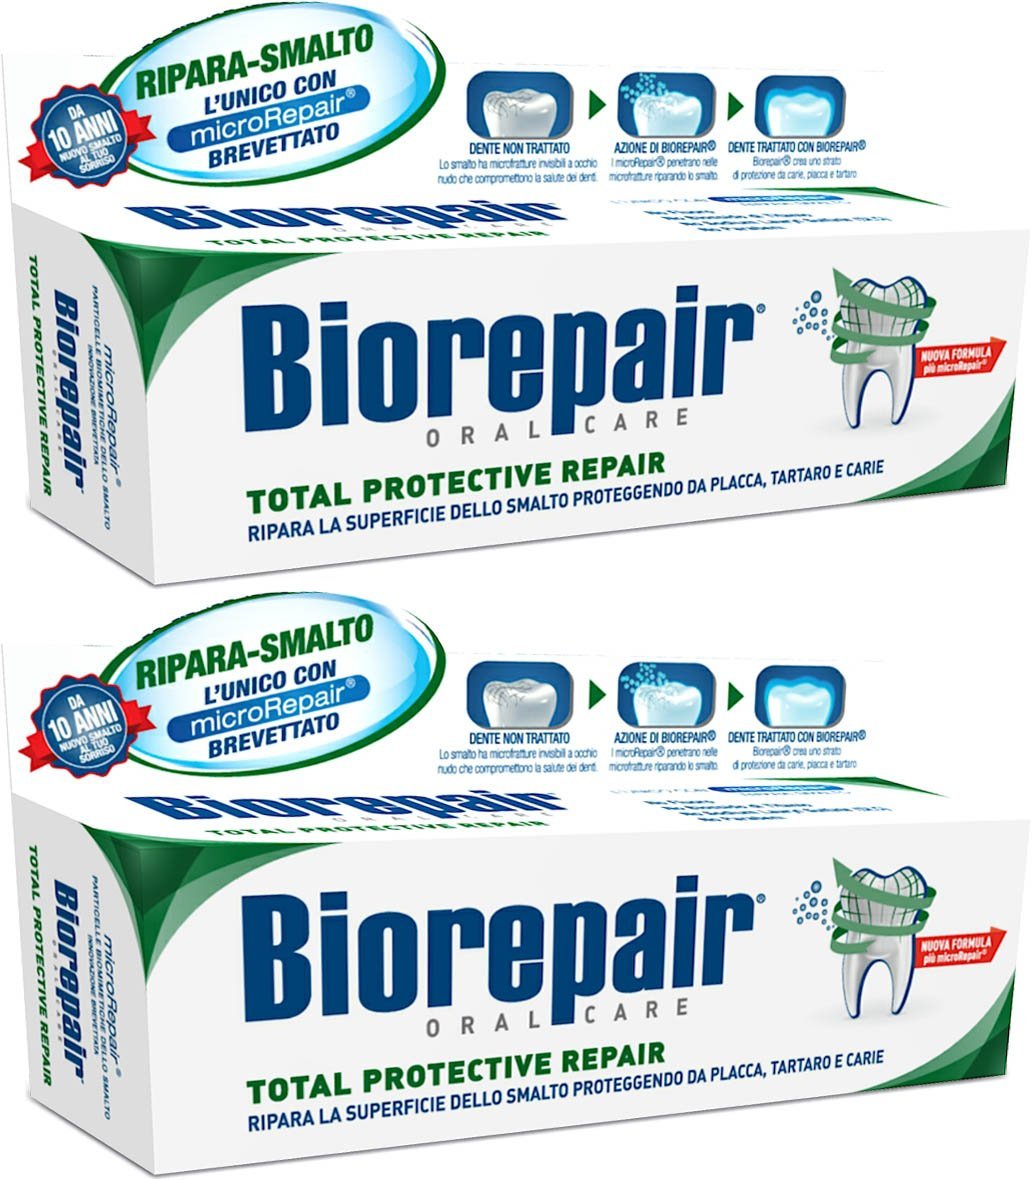 Primary image for Biorepair: "Total Protective Repair" Toothpaste with microRepair, New Formula - 